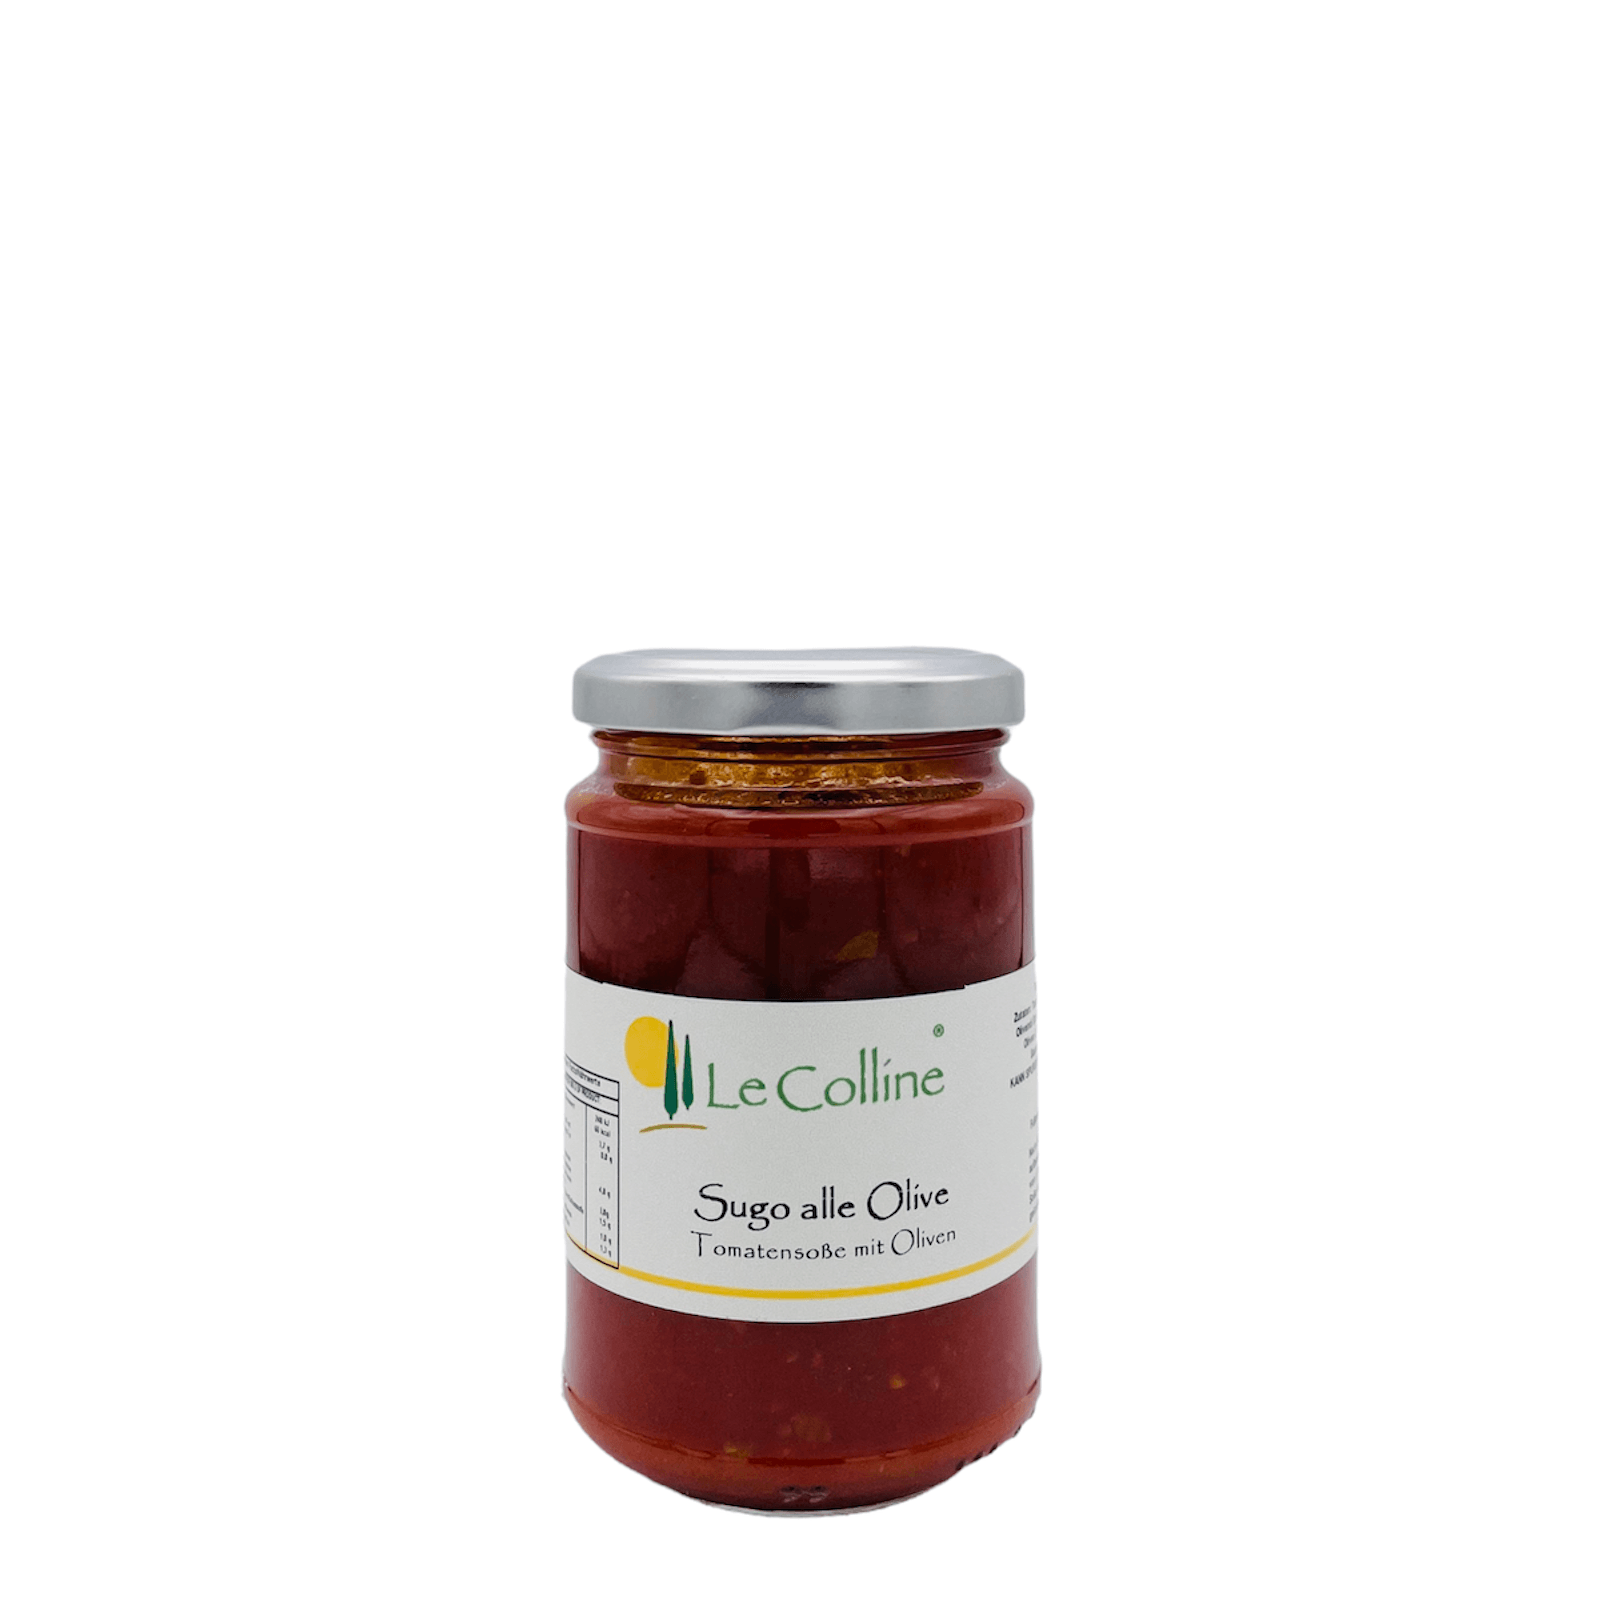 Tomatensoße mit Oliven 280g - Le Colline Store